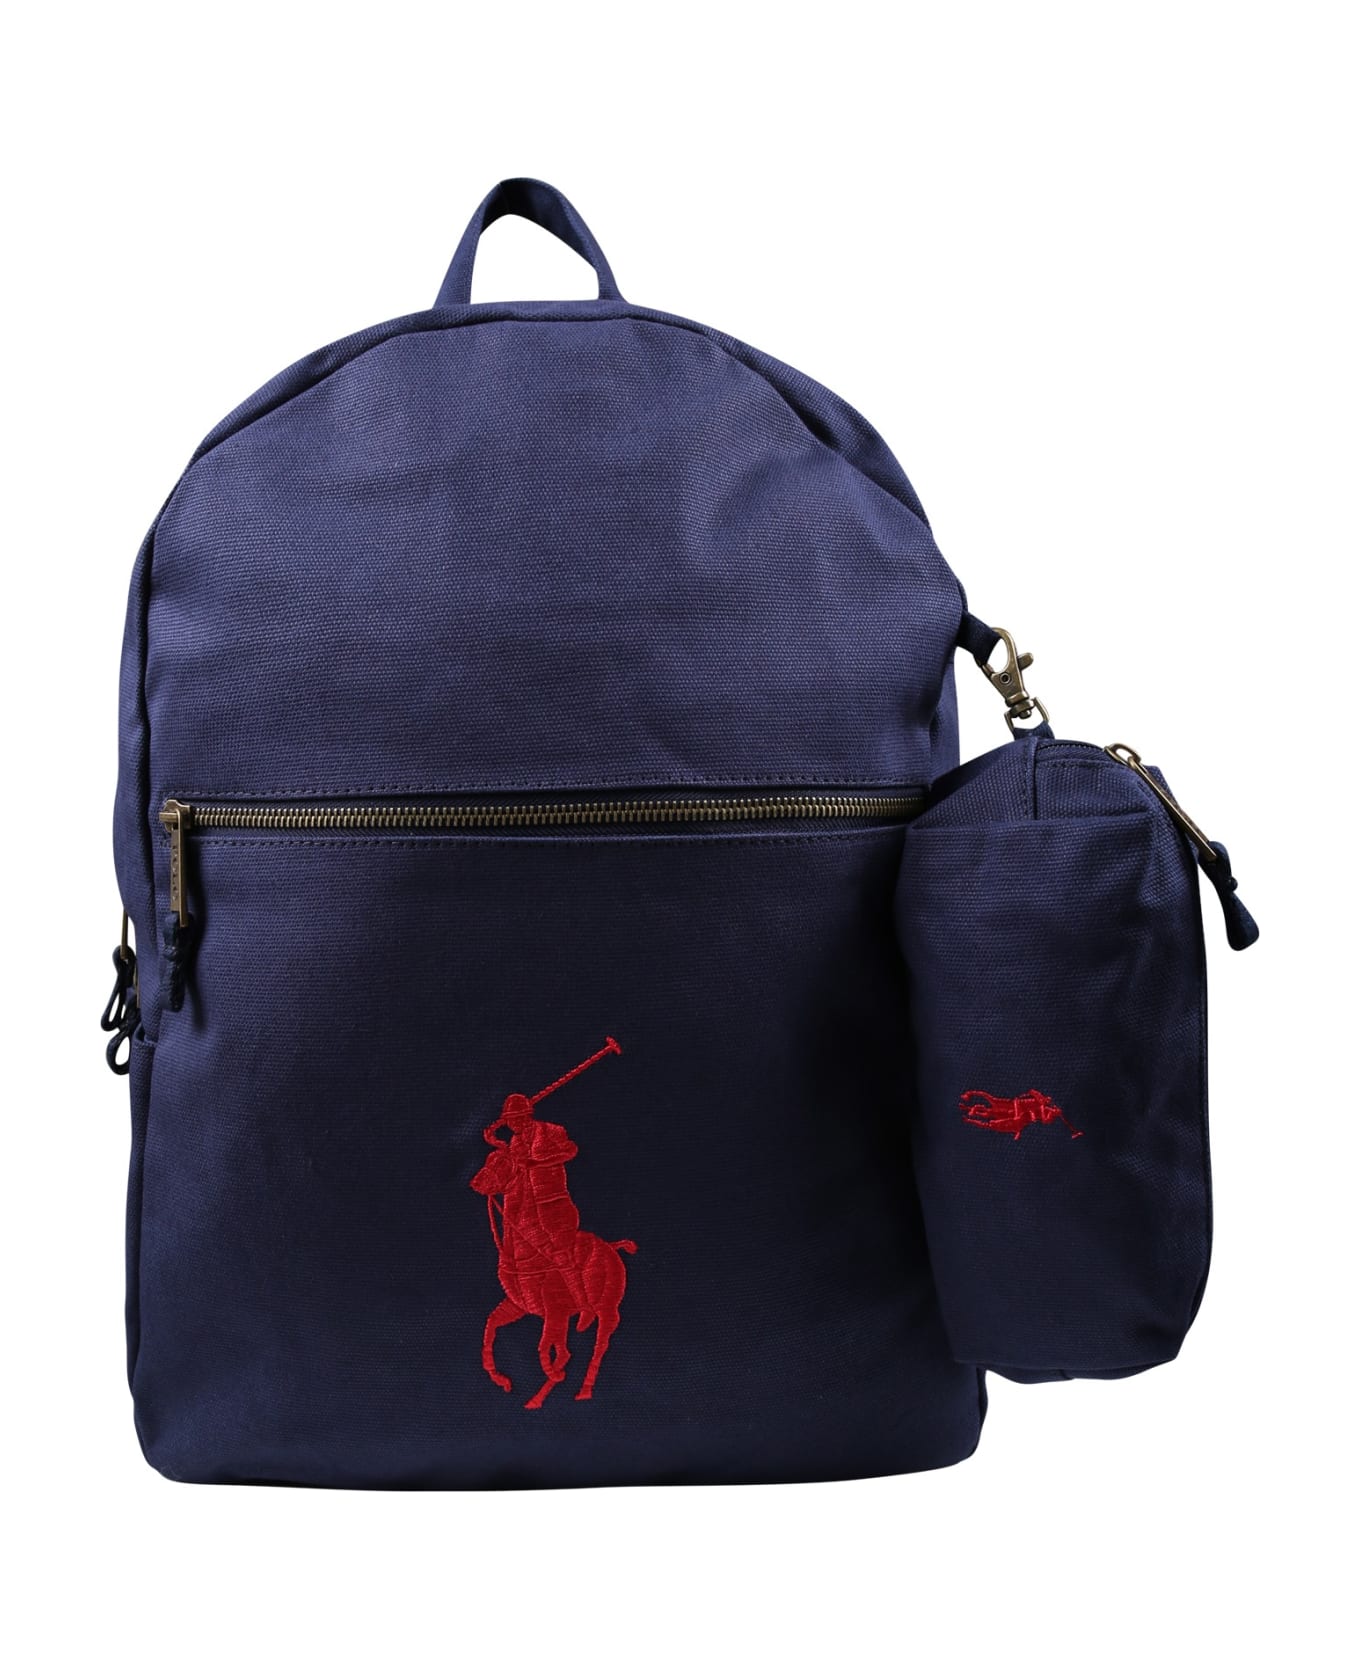 Ralph Lauren Blue Backpack For Kids With Logo - Blue